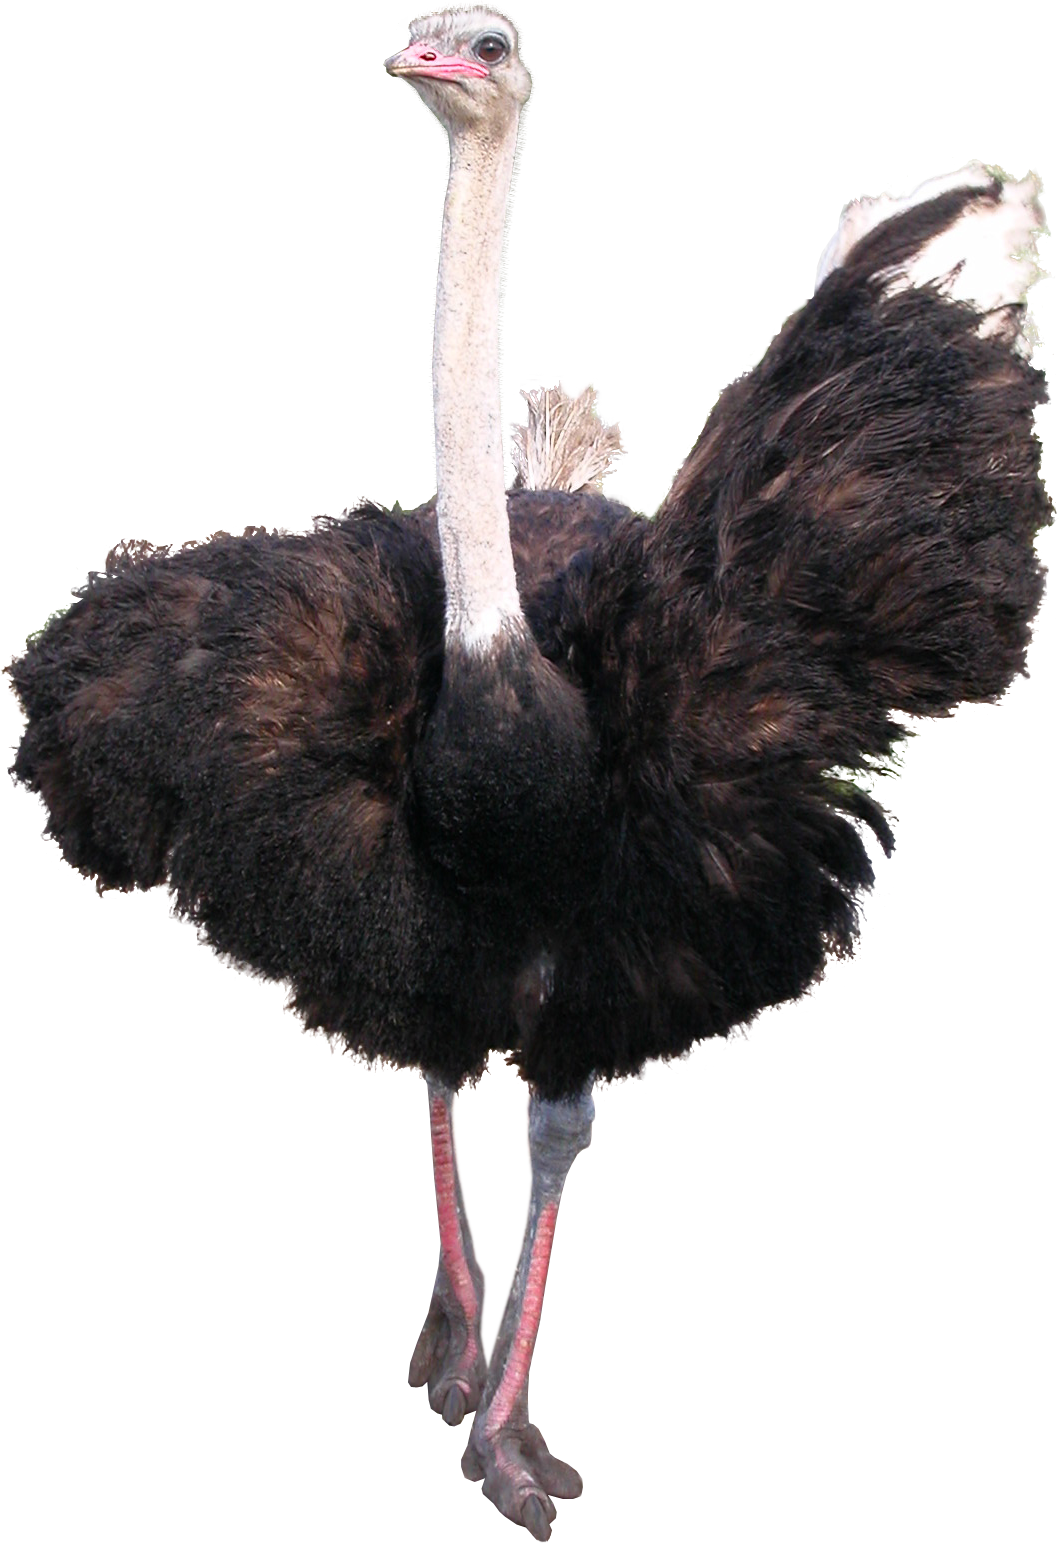 Ostrich PNG